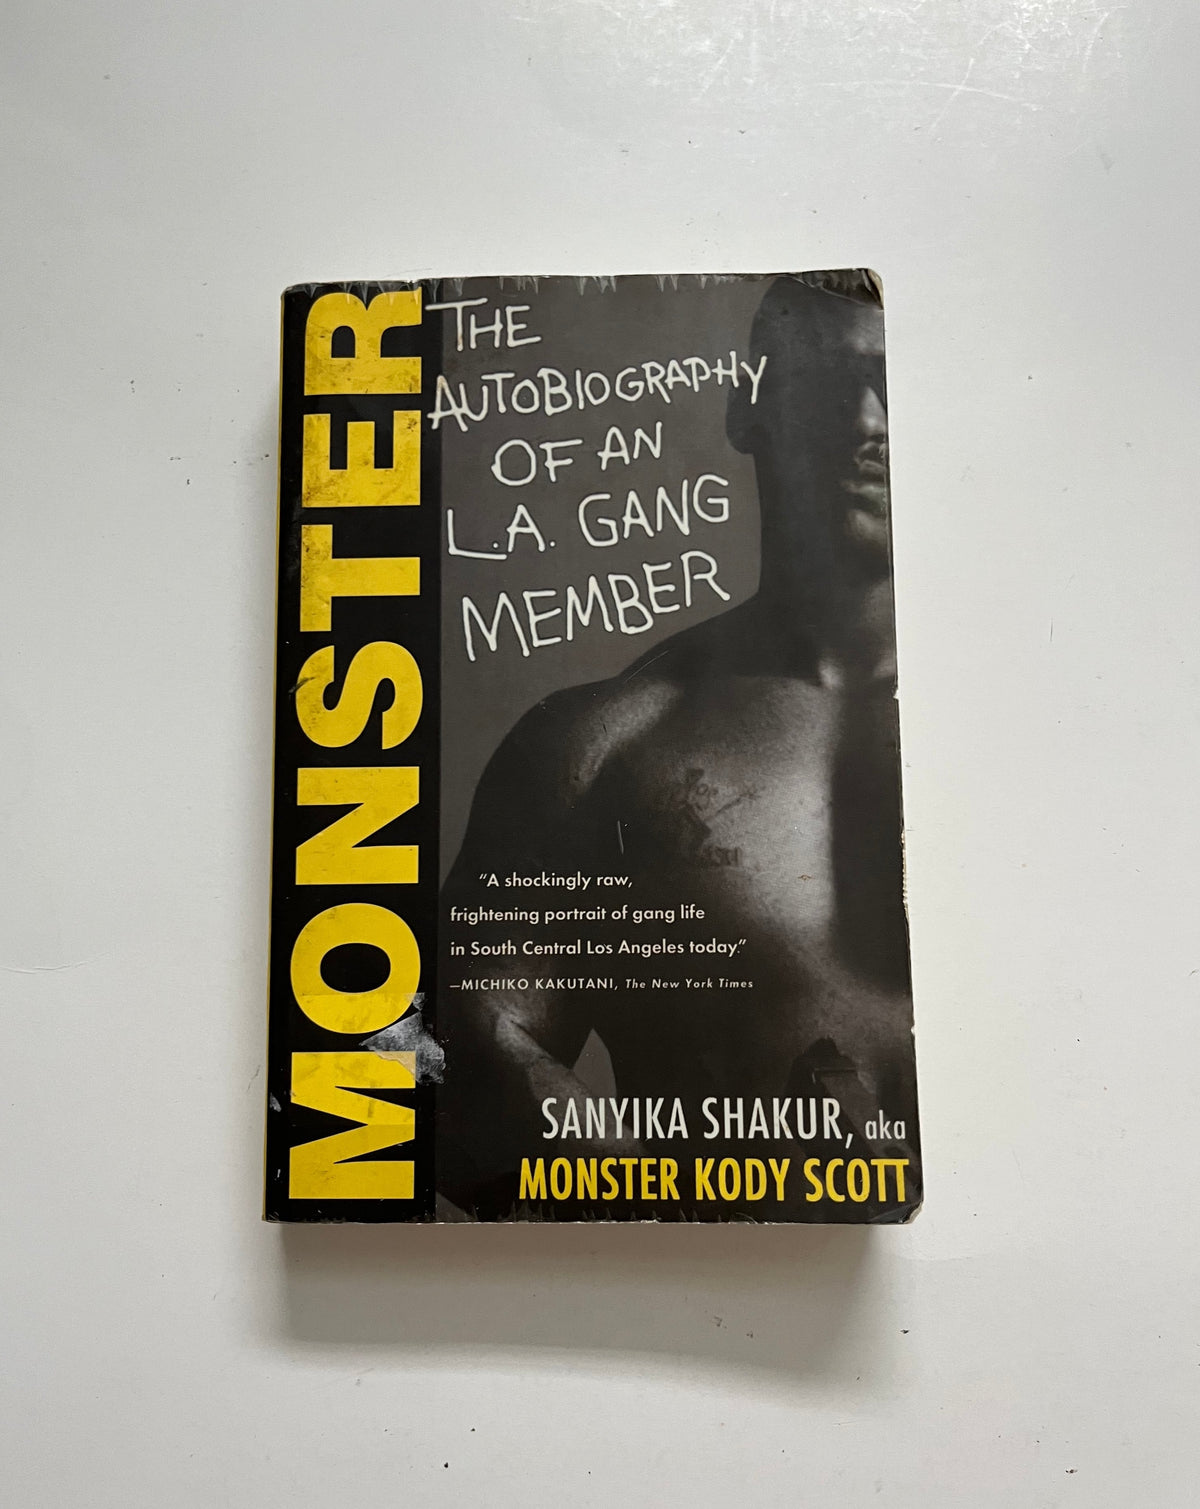 Monster: The Autobiography of an L.A. Gang Member by Sanyika Shakur aka Monster Kody Scott